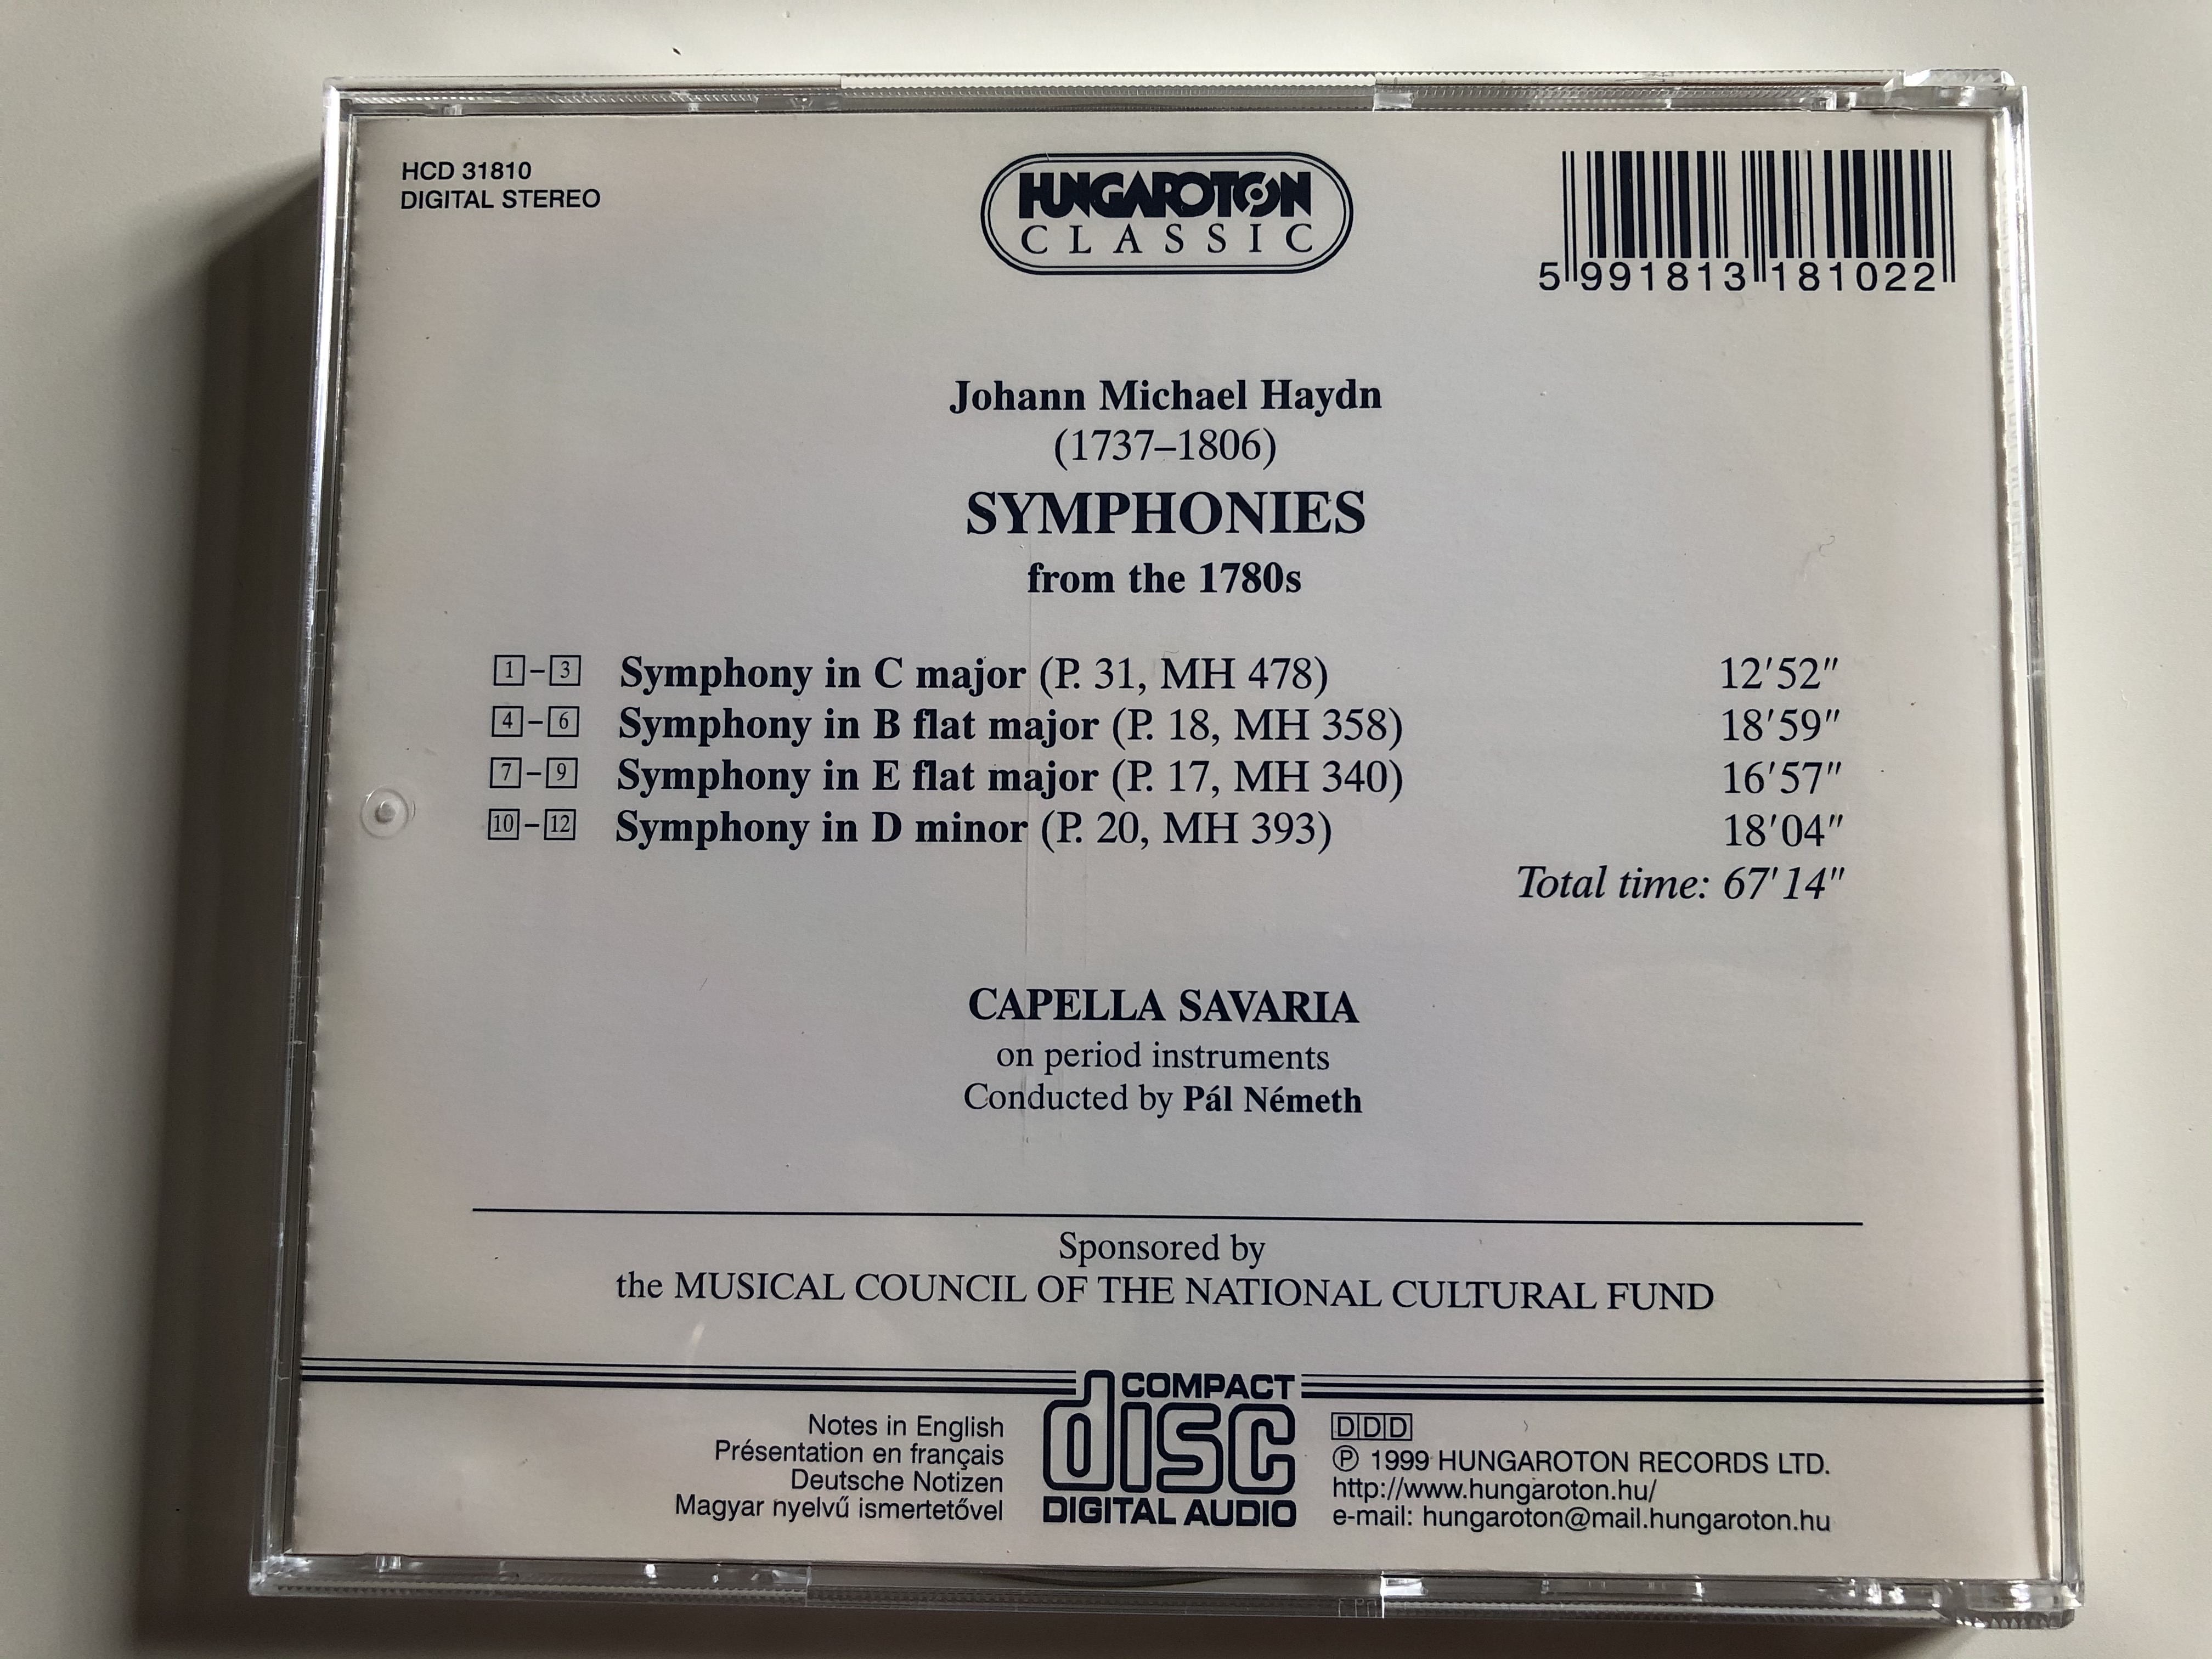 michael-haydn-symphonies-from-the-1780s-capella-savaria-on-period-instruments-pal-nemeth-hungaroton-classic-audio-cd-1999-stereo-hcd-31810-9-.jpg